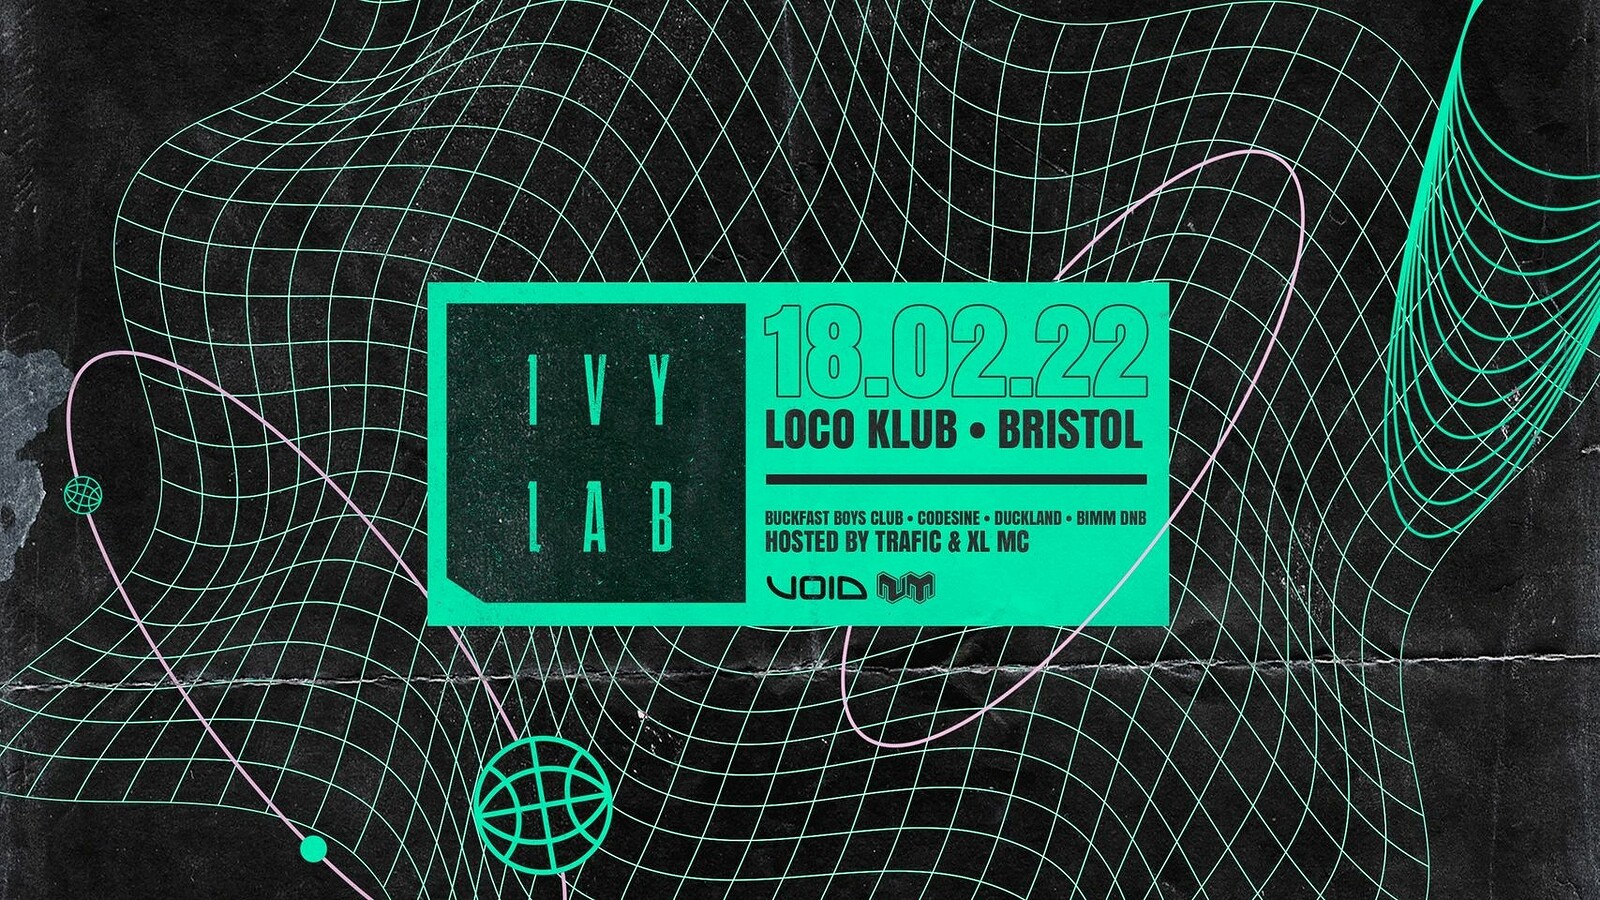 Ivy Lab • Bristol at The Loco Klub